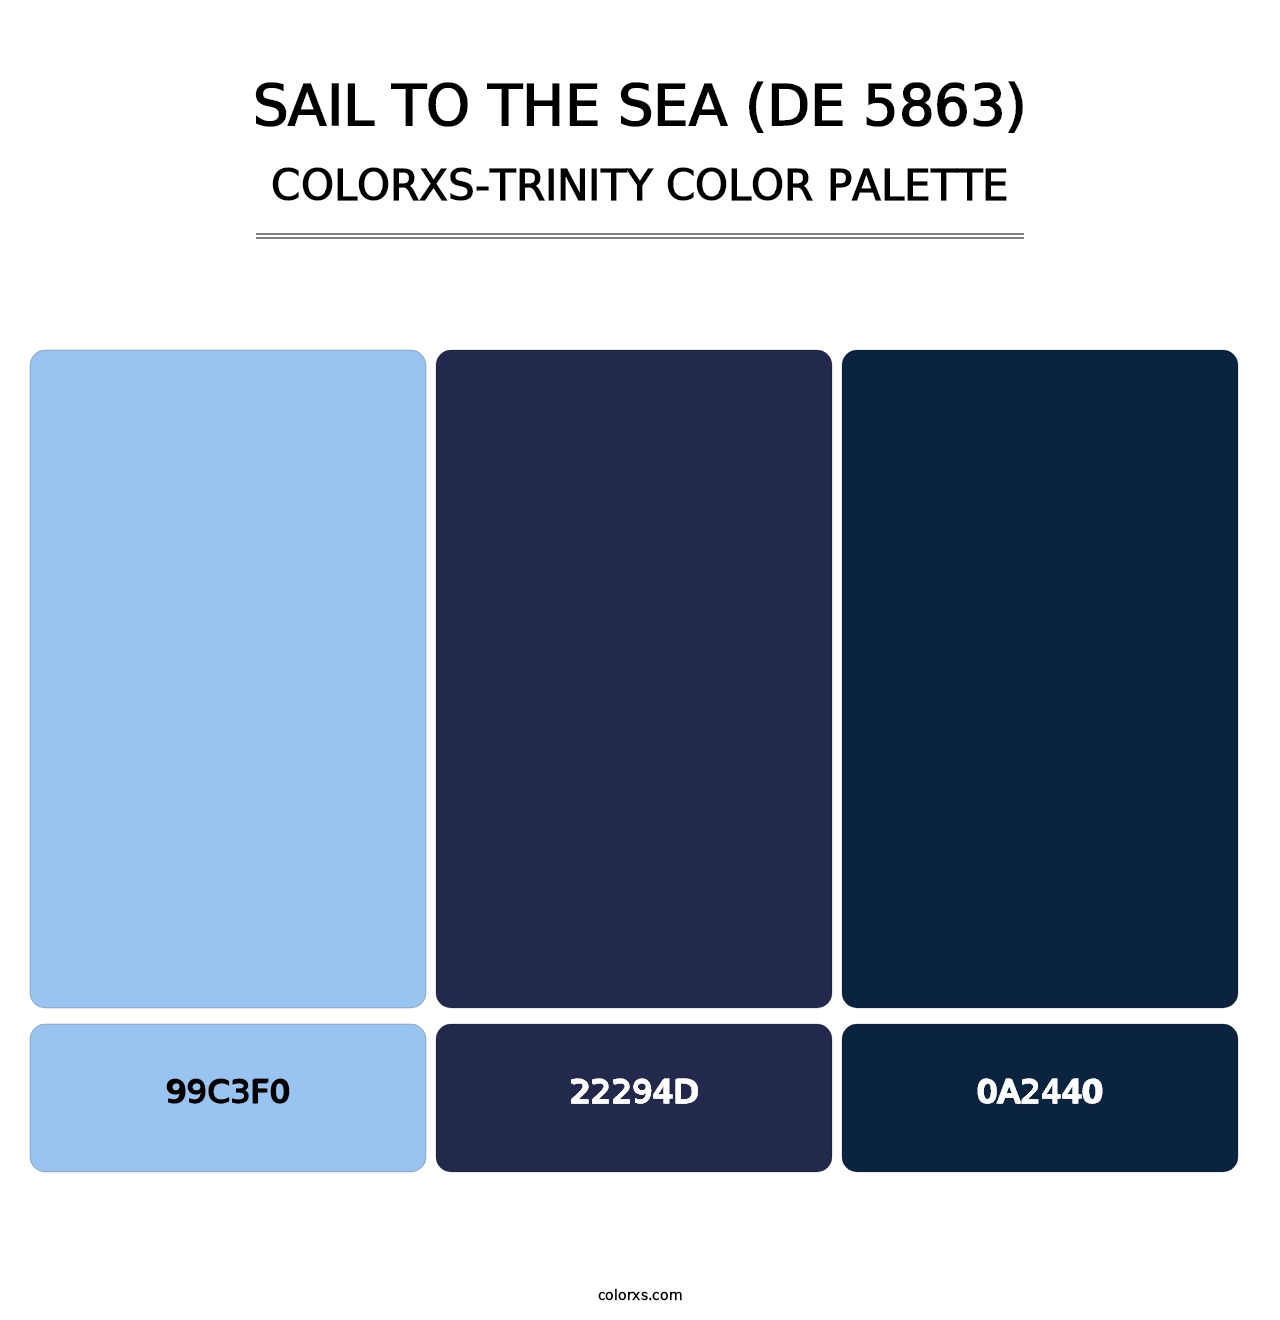 Sail to the Sea (DE 5863) - Colorxs Trinity Palette